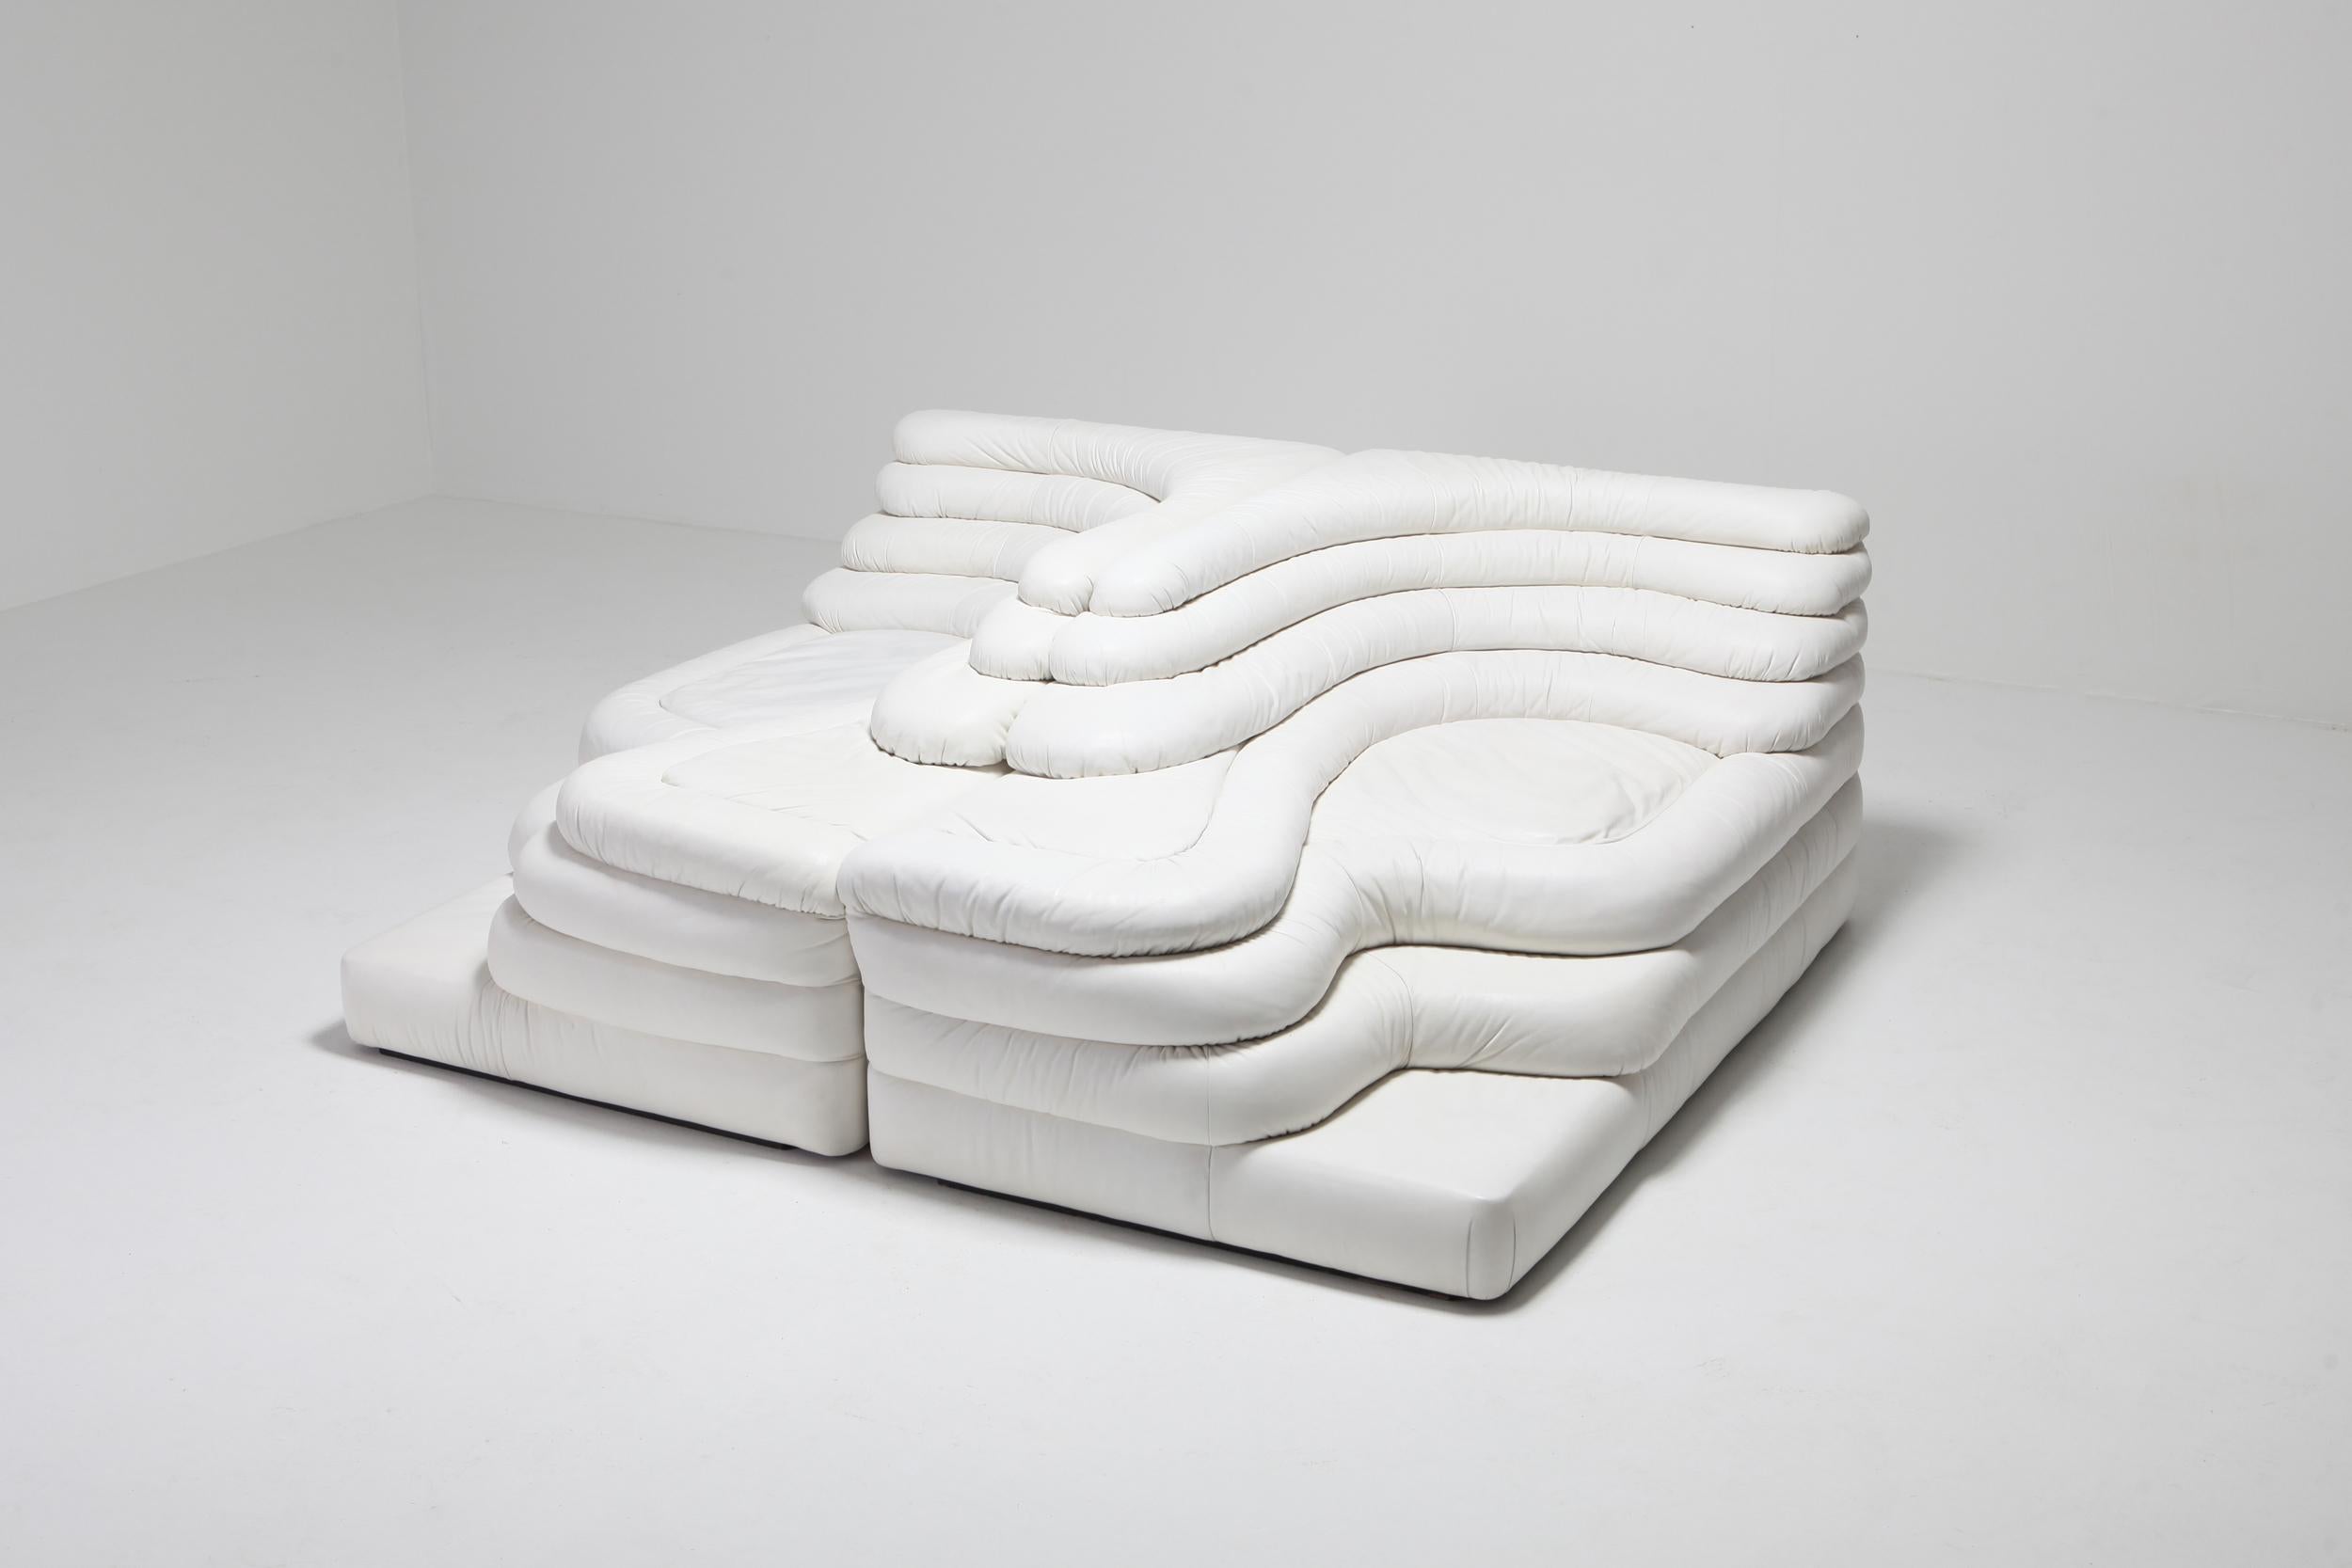 Post-Modern De Sede 'Terrazza' Sofas DS 1025 in White Leather 1972 by U. Klug & Ueli Berger